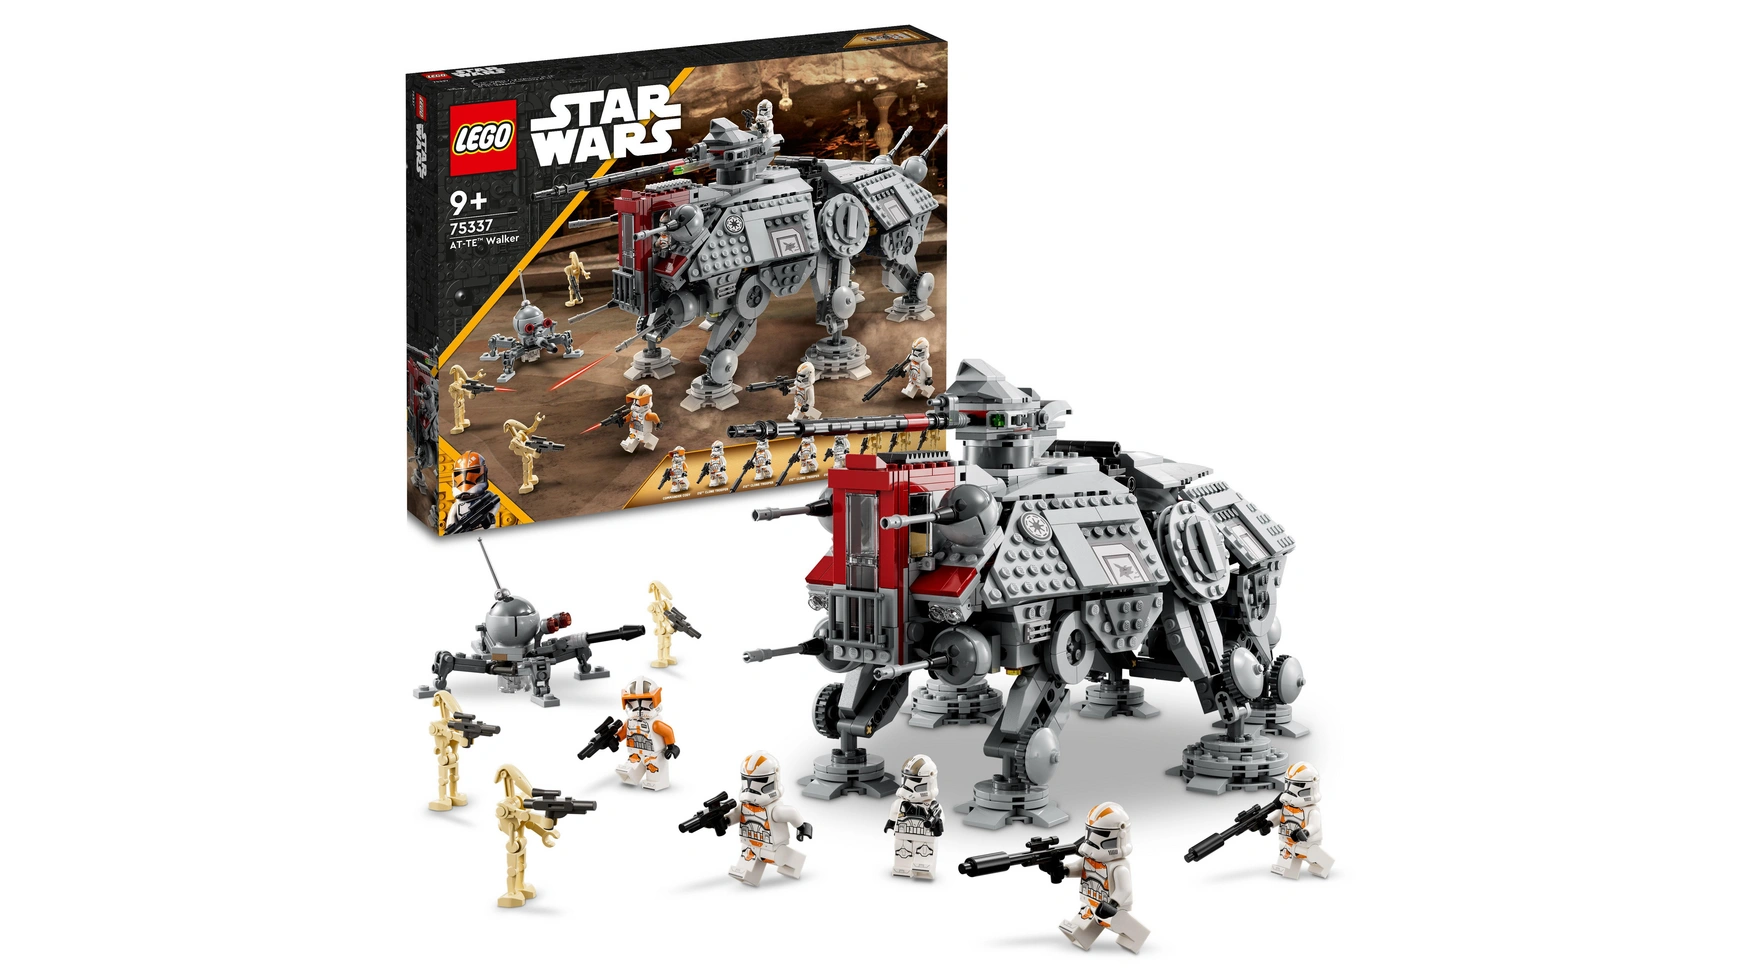 Lego Star Wars Набор минифигурок AT-TE Уокер, Месть ситхов конструктор лезвие бритвы 75292 lego star wars